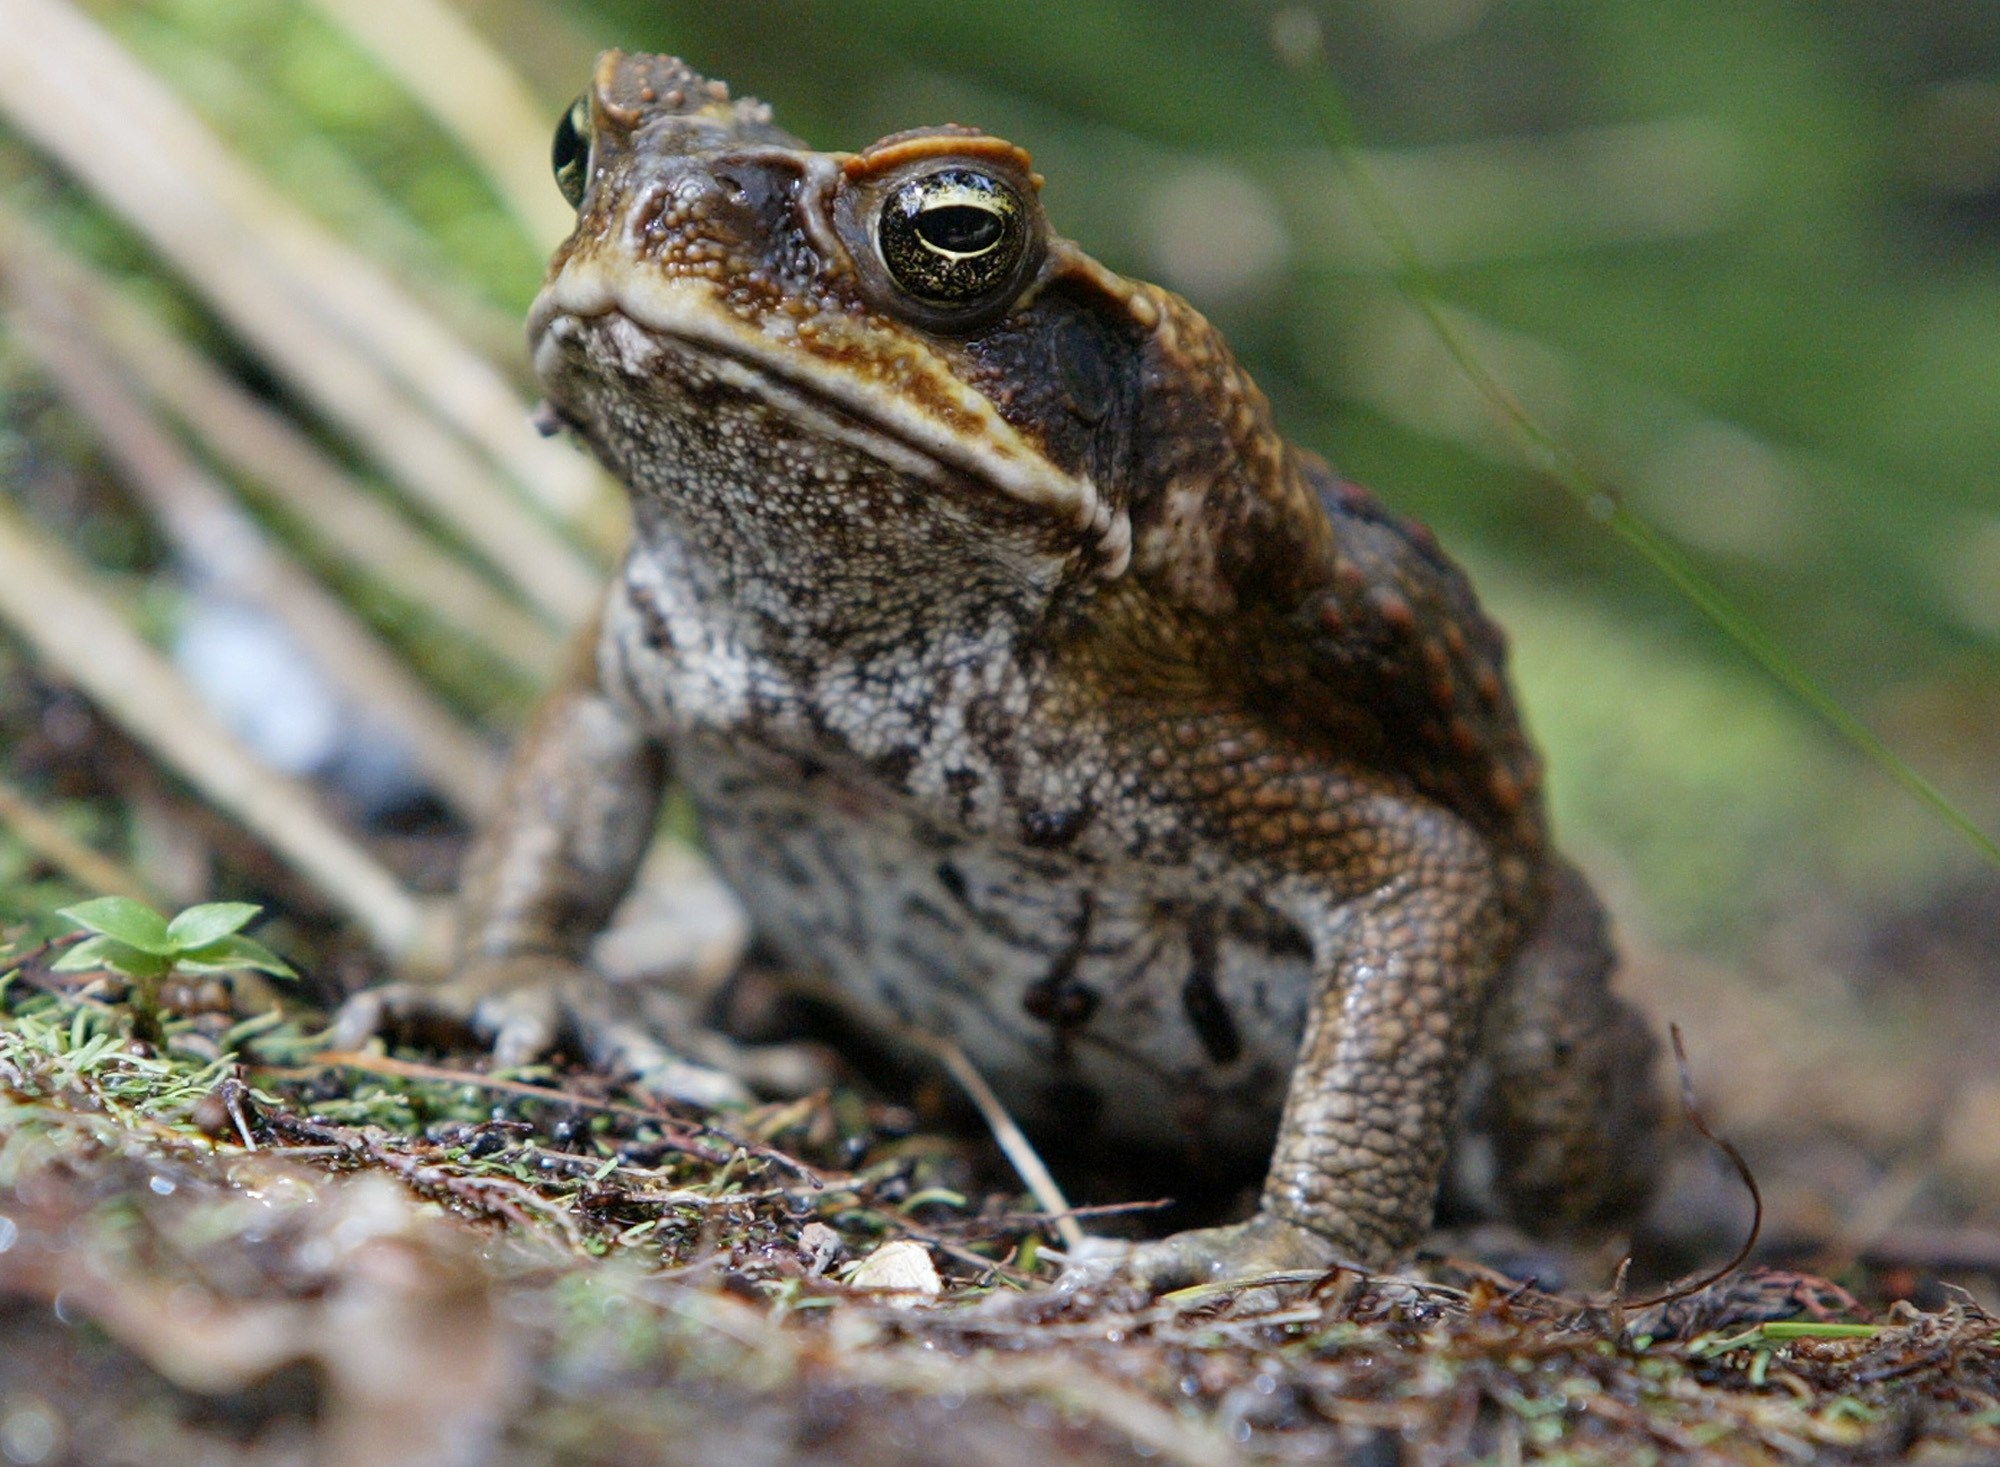 Poisonous Toads Infest Suburban Florida Neighborhood Weny News 0763